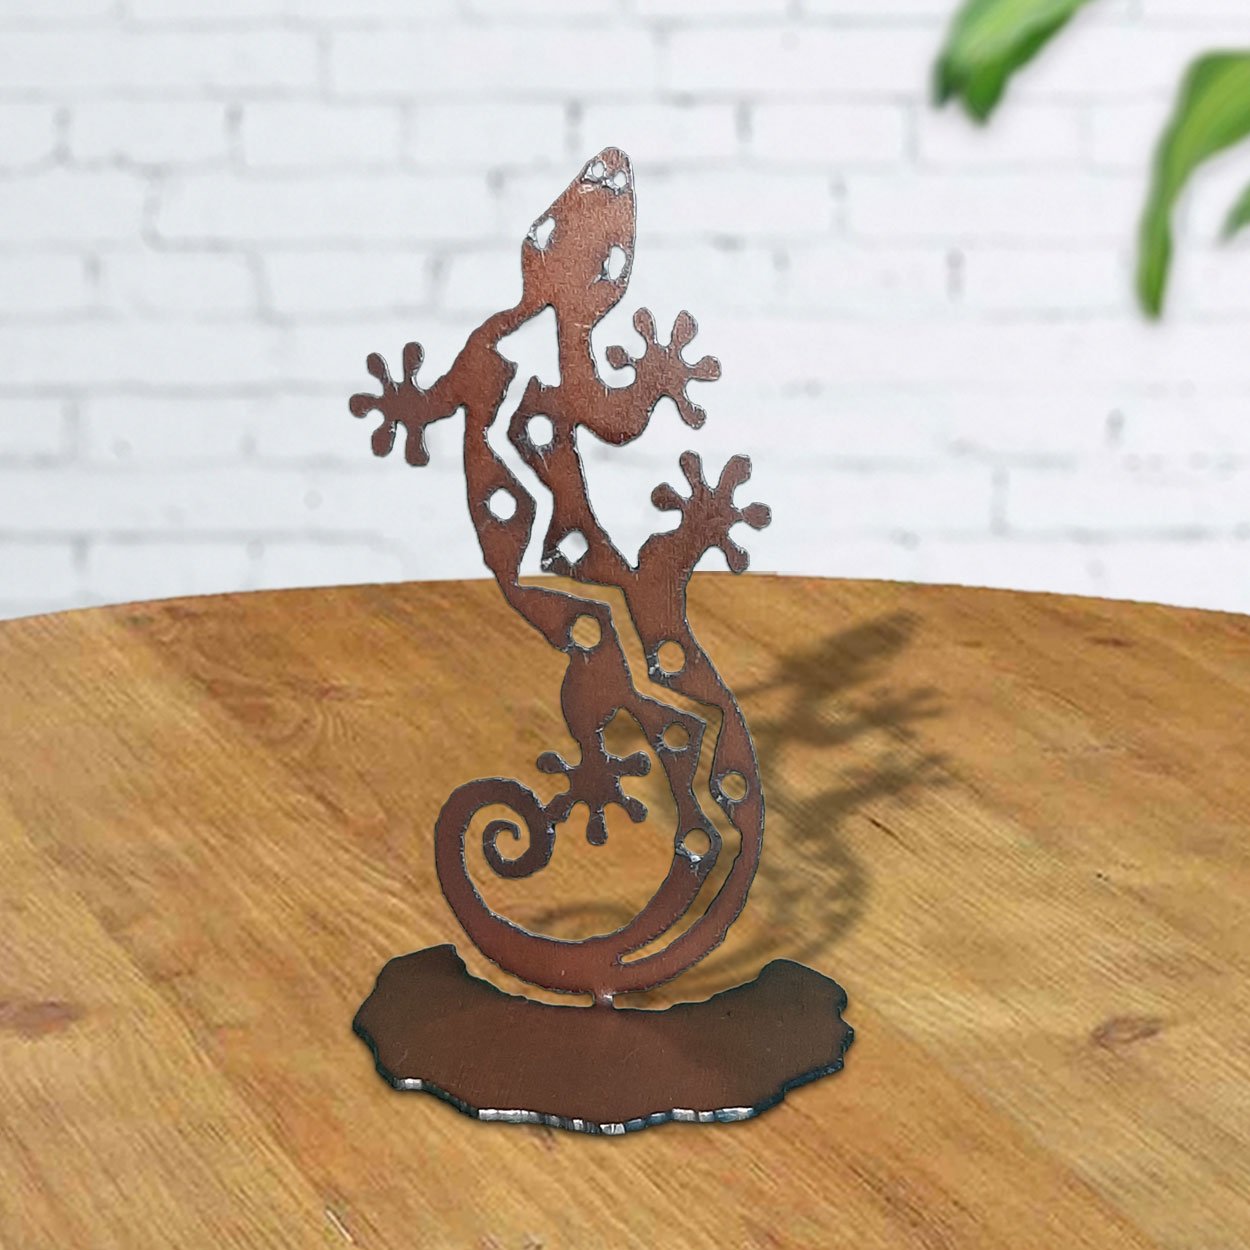 165905 - 7in Rustic Metal Table Top Sculpture - Southwest Gecko